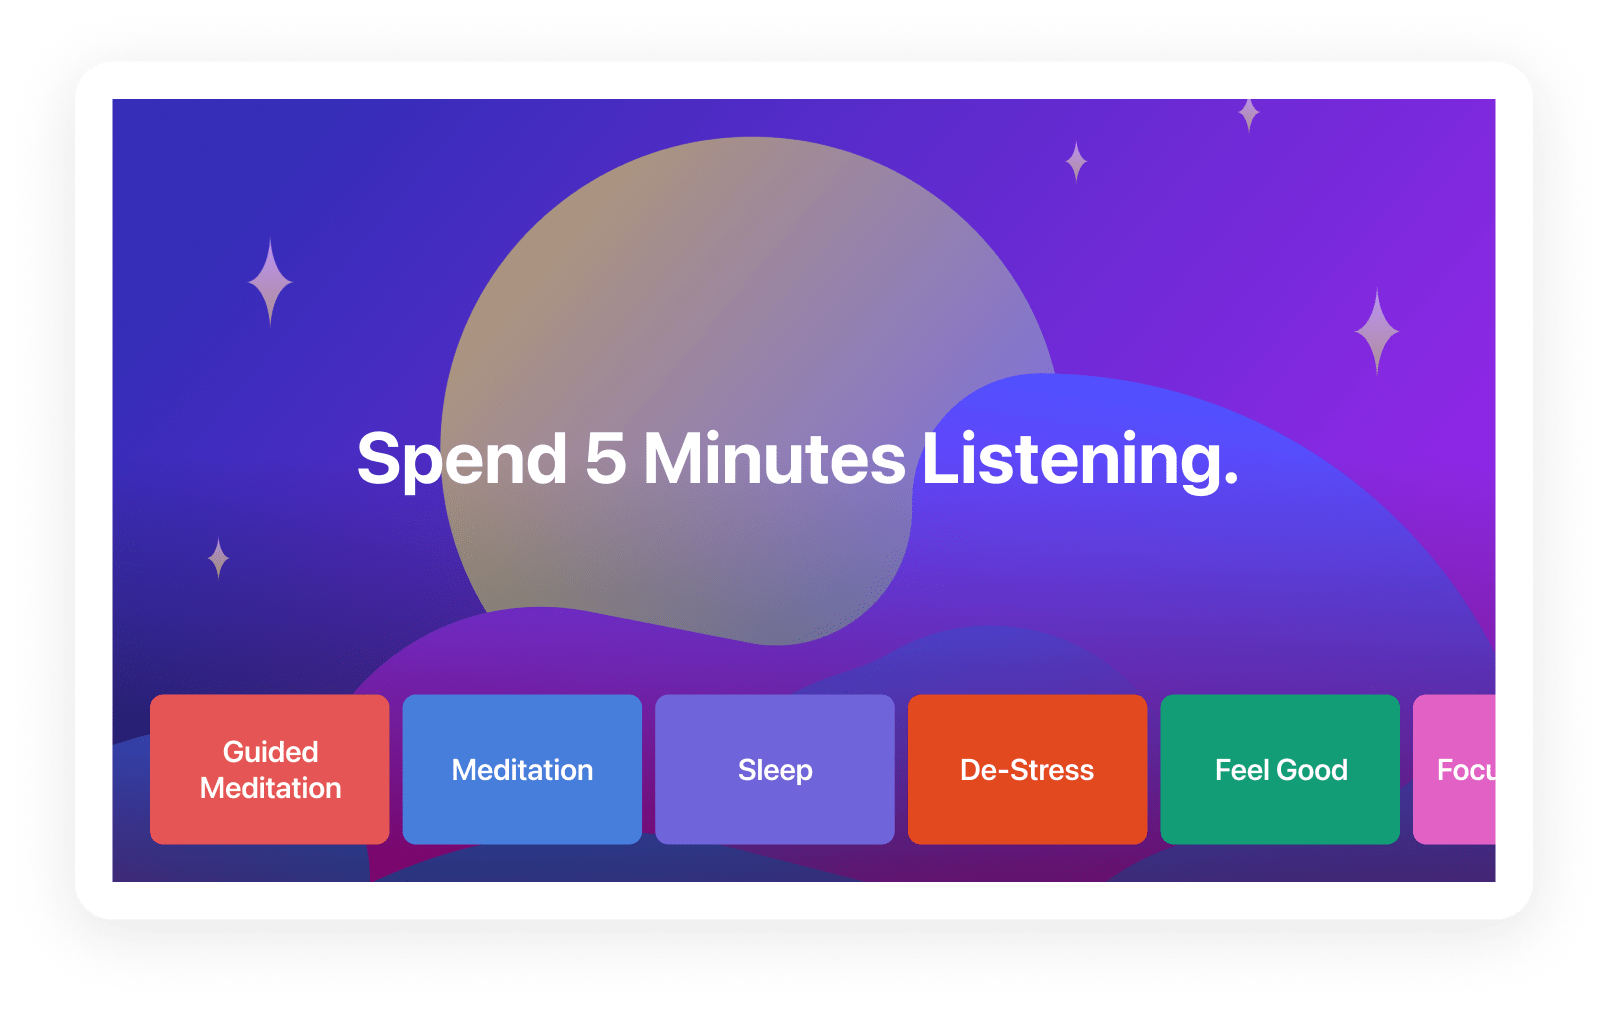 Spend 5 Minutes Listening.